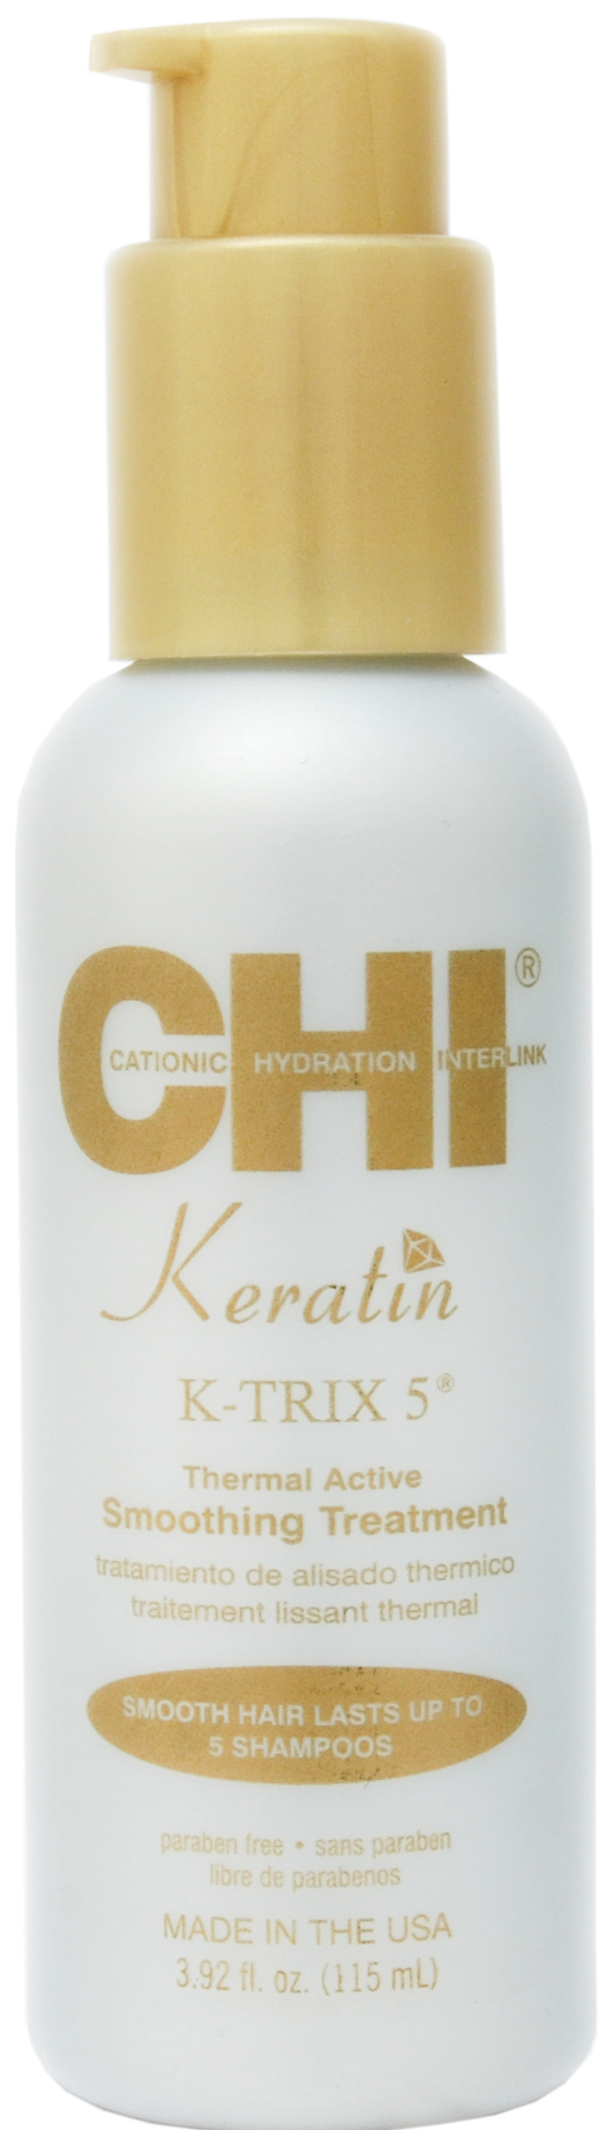 Эмульсия для волос CHI Keratin K-TRIX 5 Thermal Active Smoothing разглаживающая, 115 мл разглаживающая эмульсия для вьющихся волос bioactive x curly